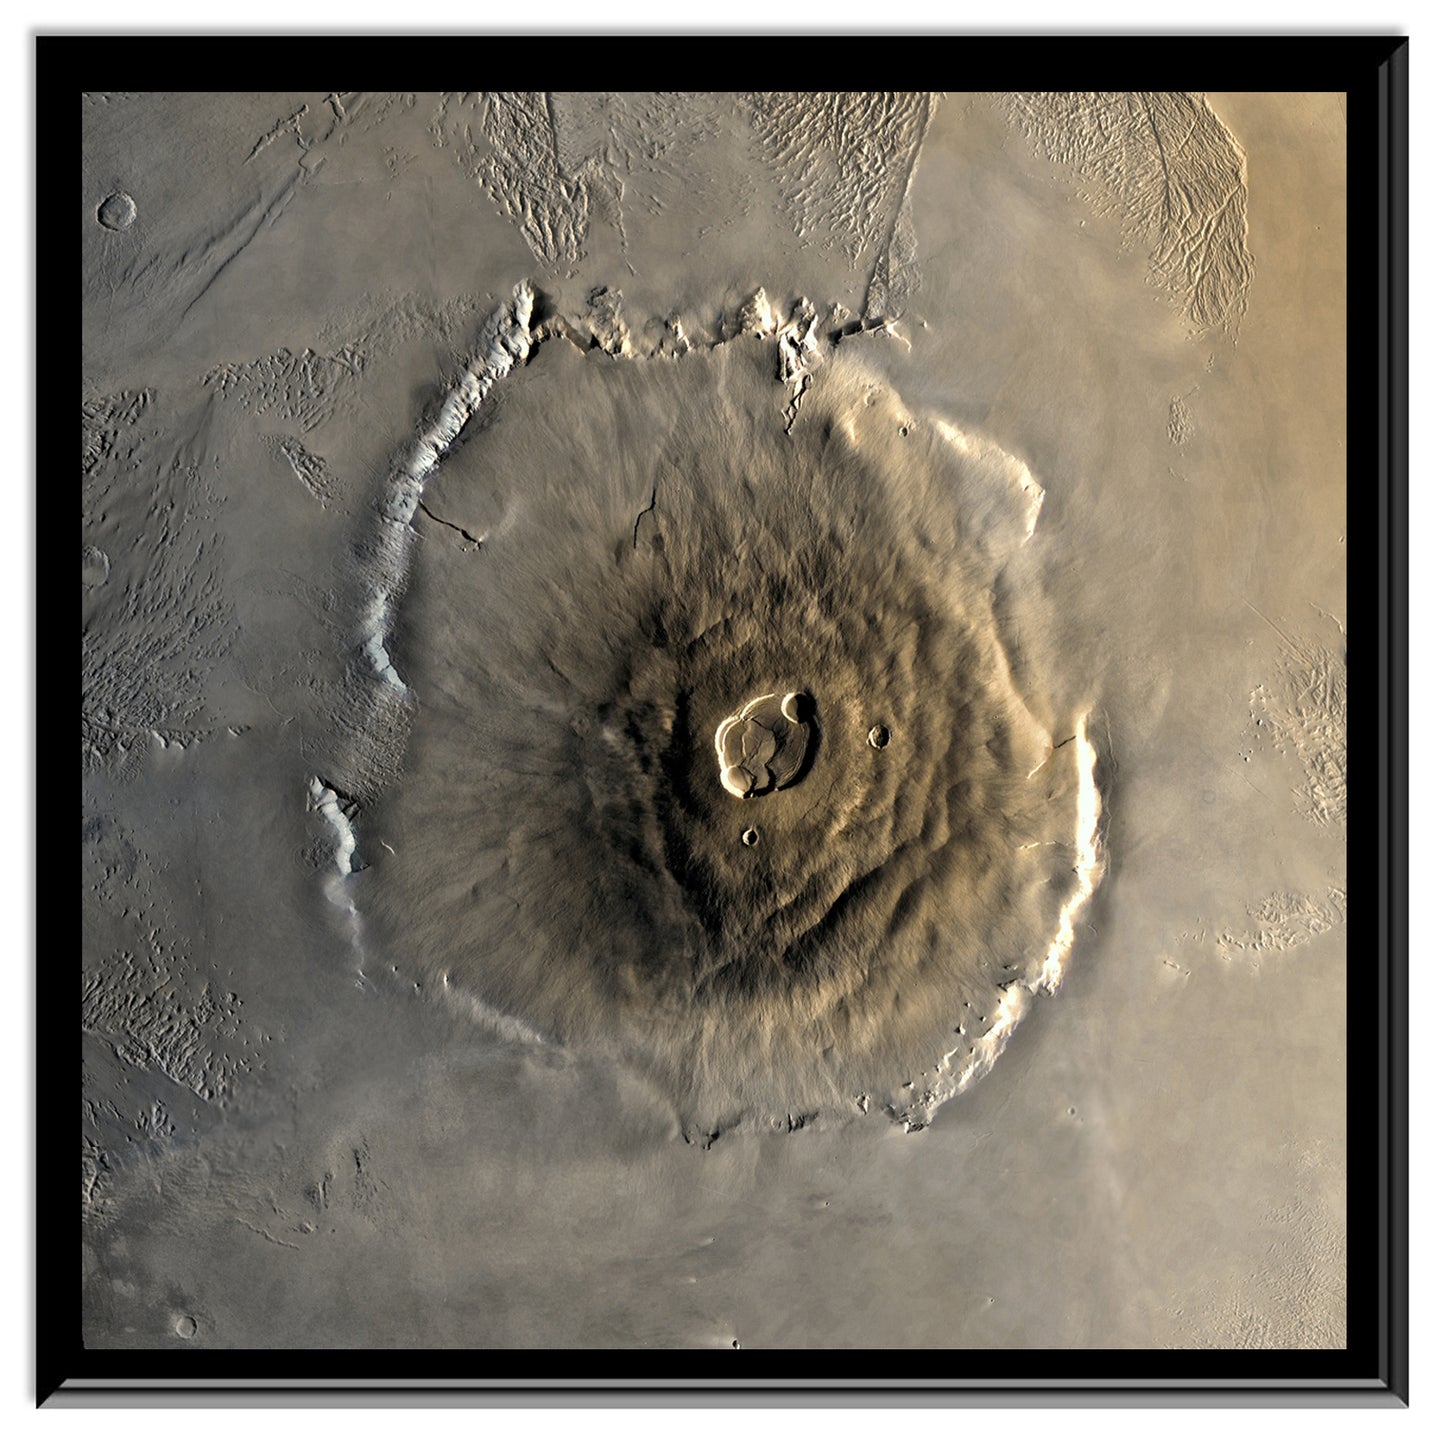 Viking orbiter image of Olympus Mons on Mars